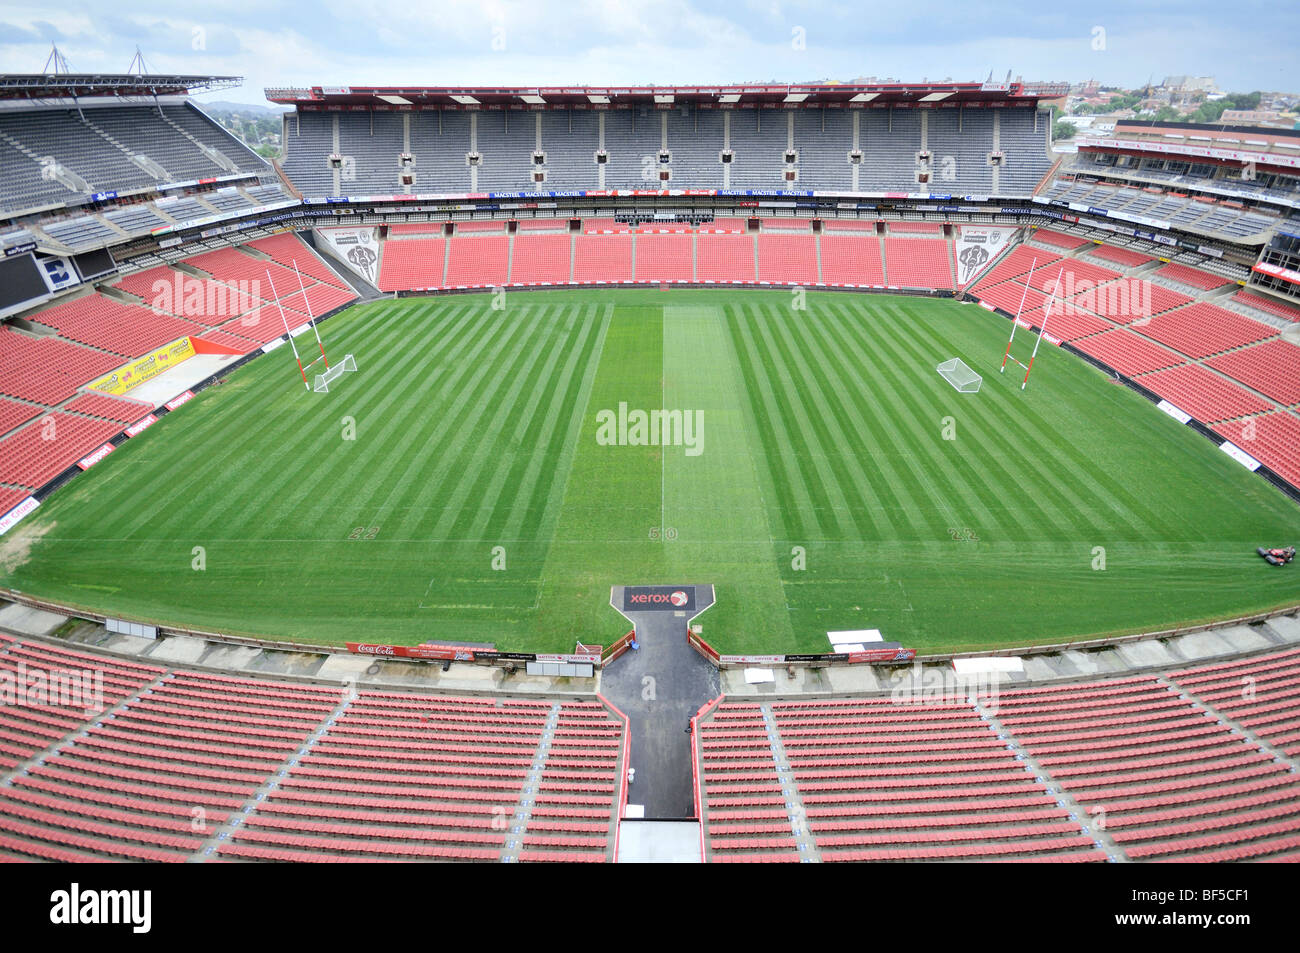 2010 FIFA World Cup, Ellis Park oder Coca-Cola Park Stadion in Johannesburg, Südafrika, Afrika Stockfoto